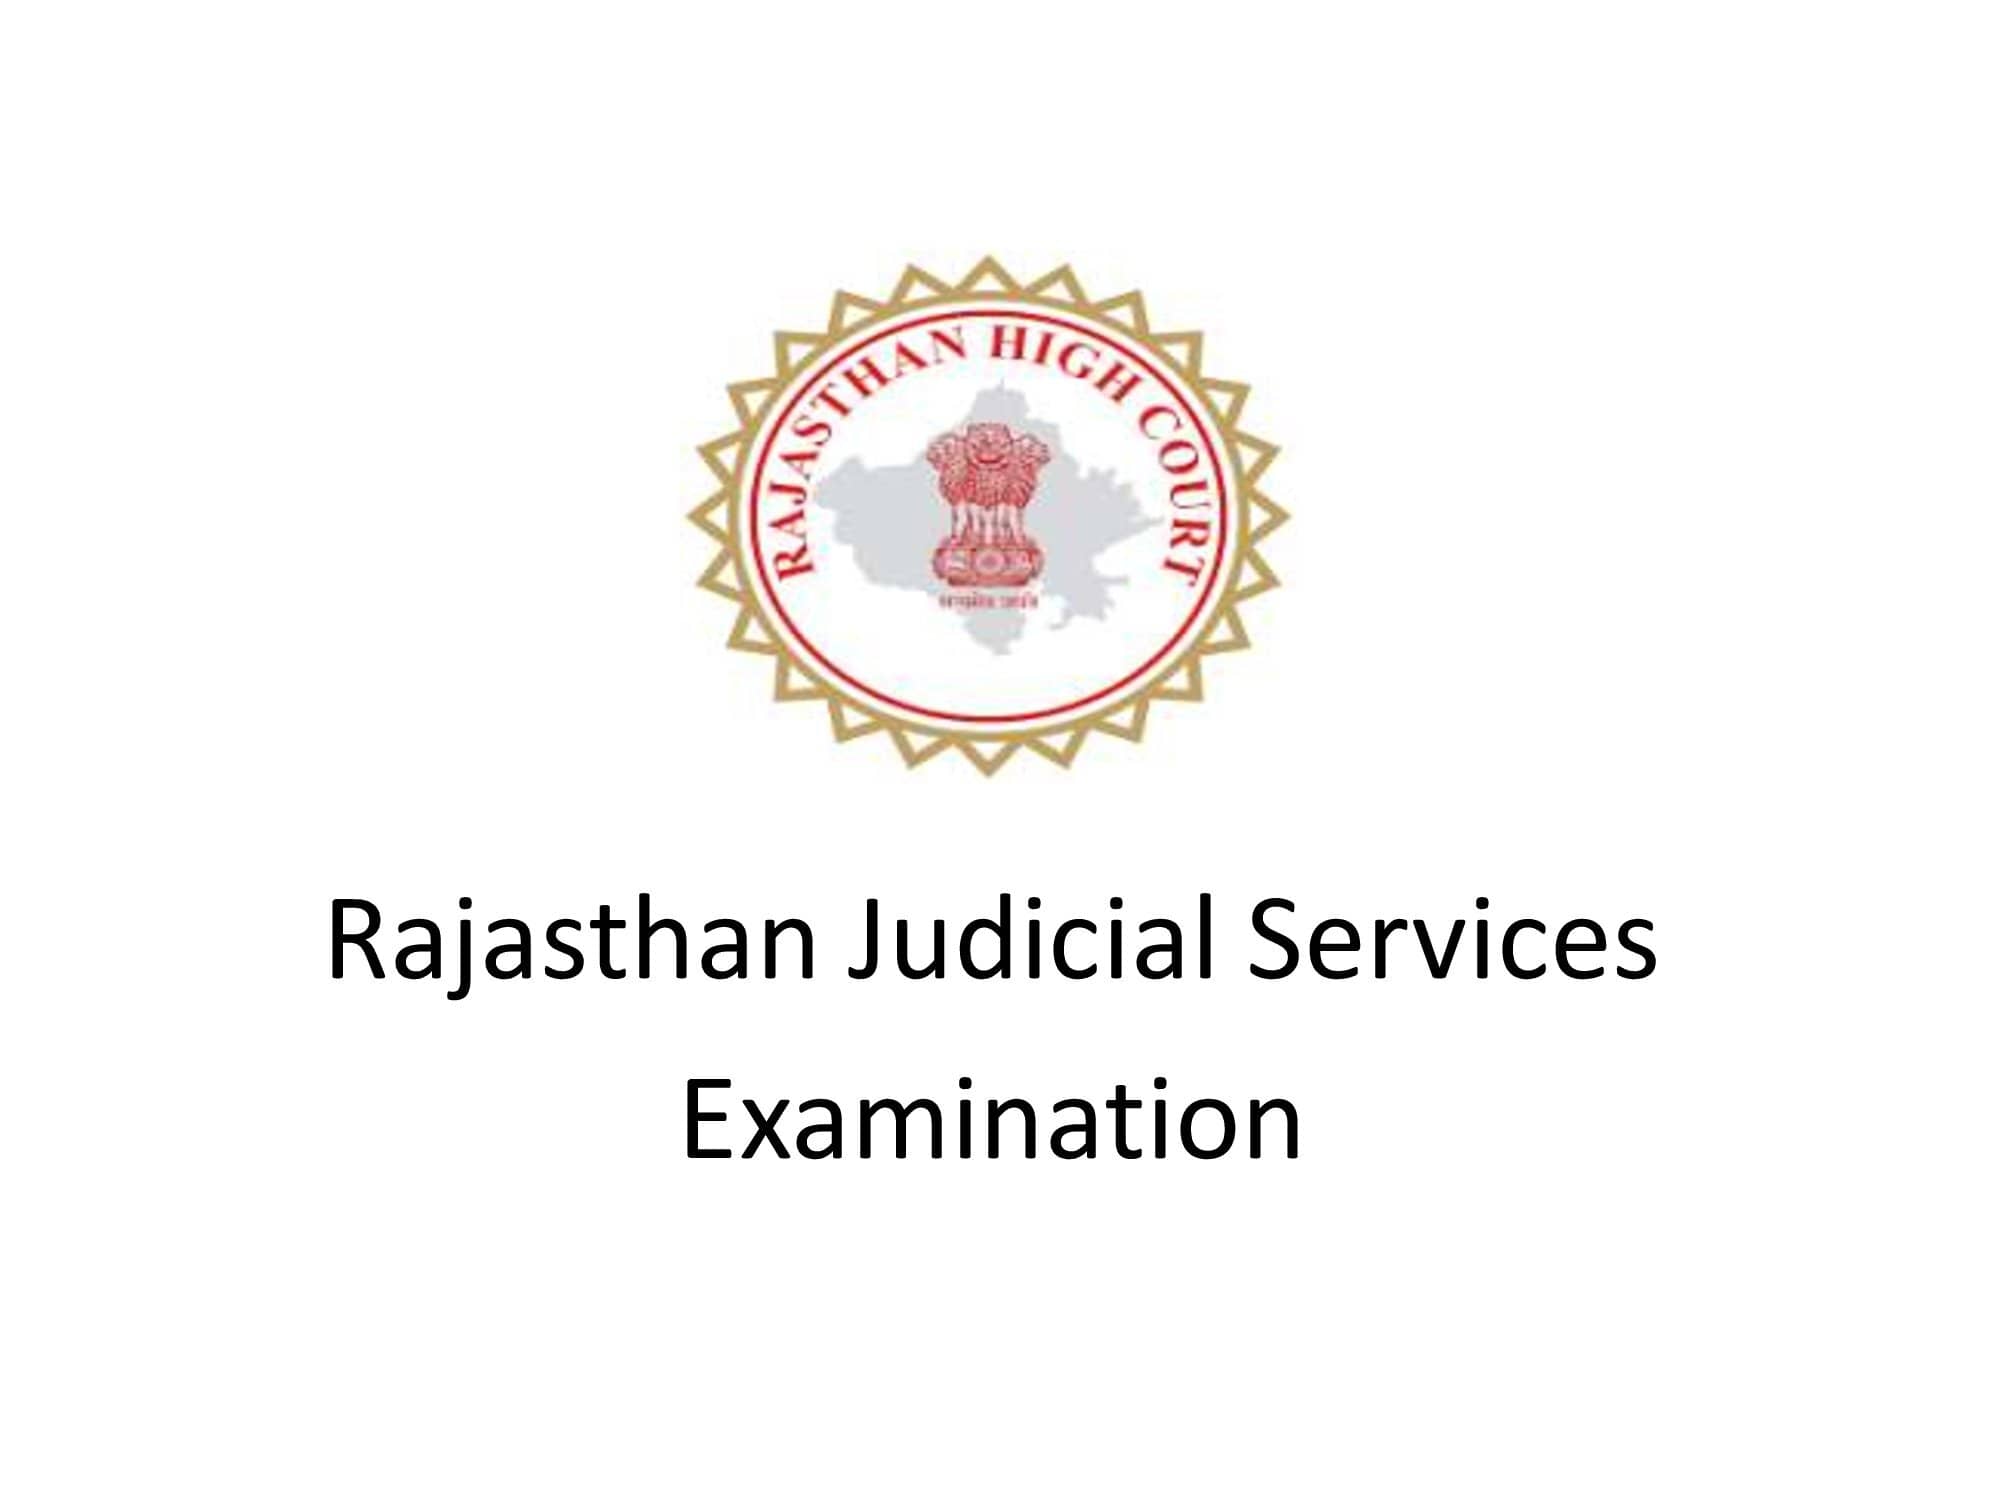 Rajasthan Judicial Service Exam